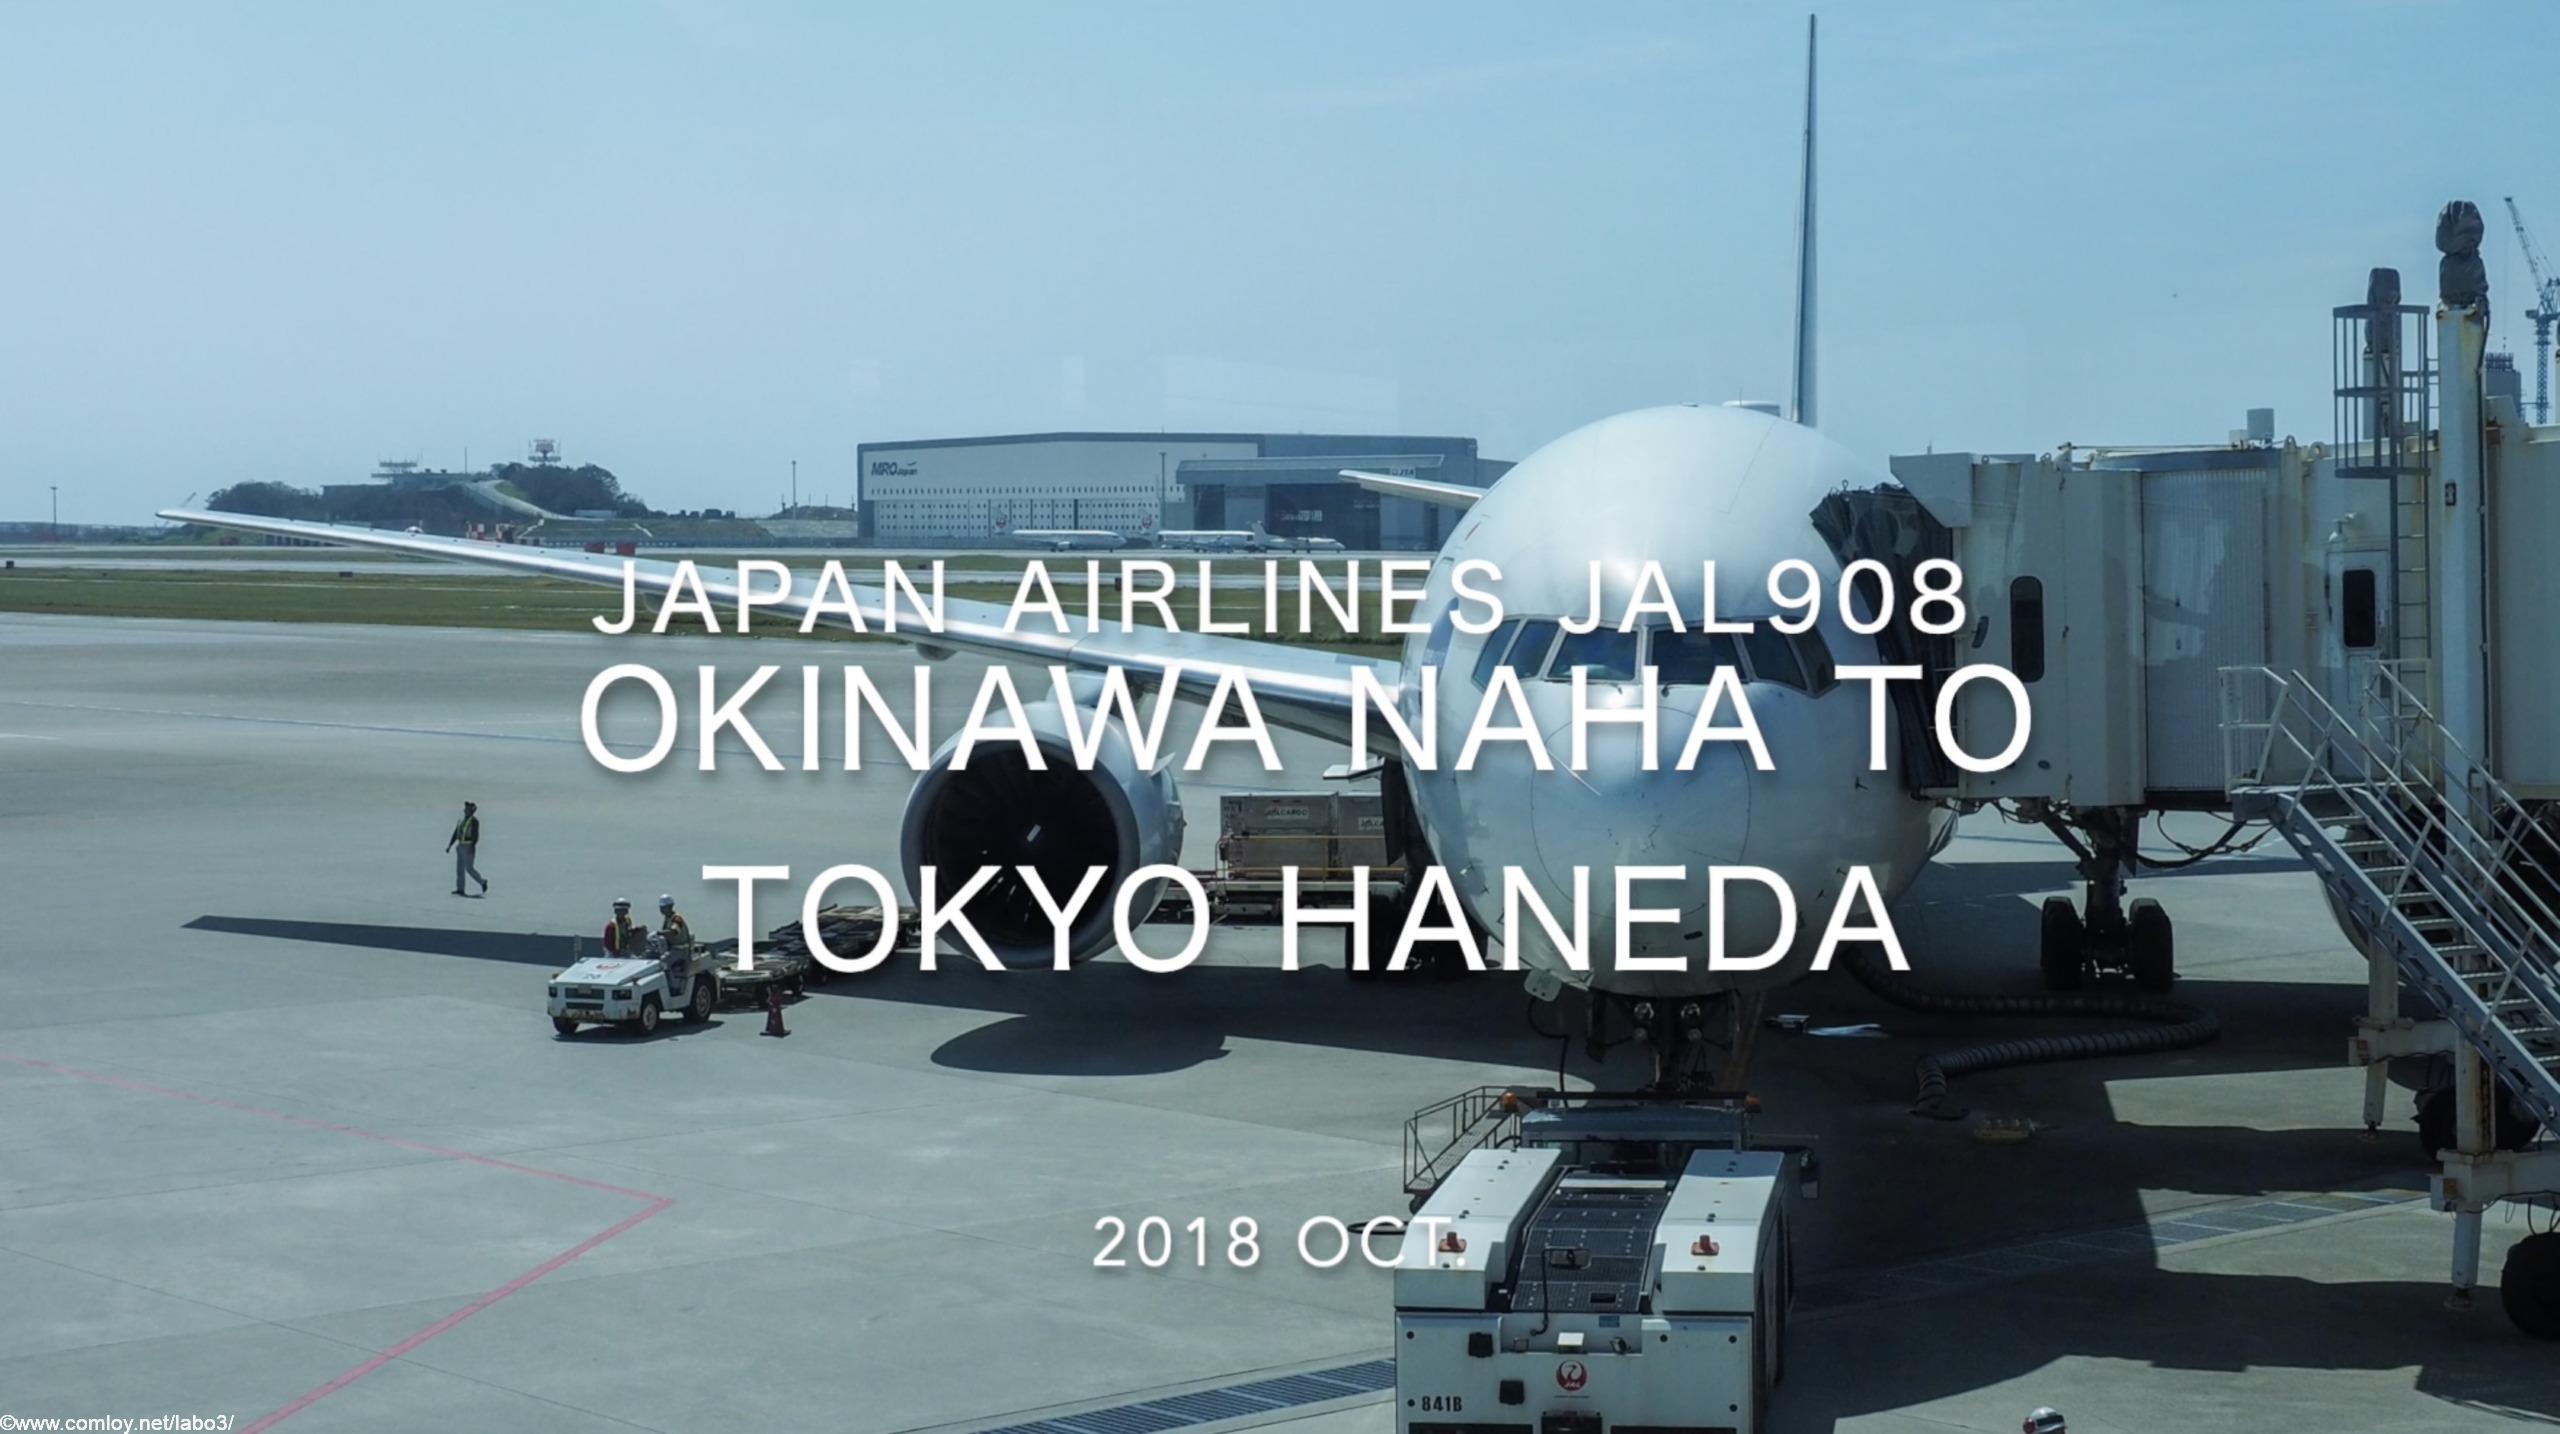 【Flight Report】2018 Oct Japan Airlines JAL908 OKINAWA NAHA TO TOKYO HANEDA 日本航空 那覇 - 羽田 搭乗記